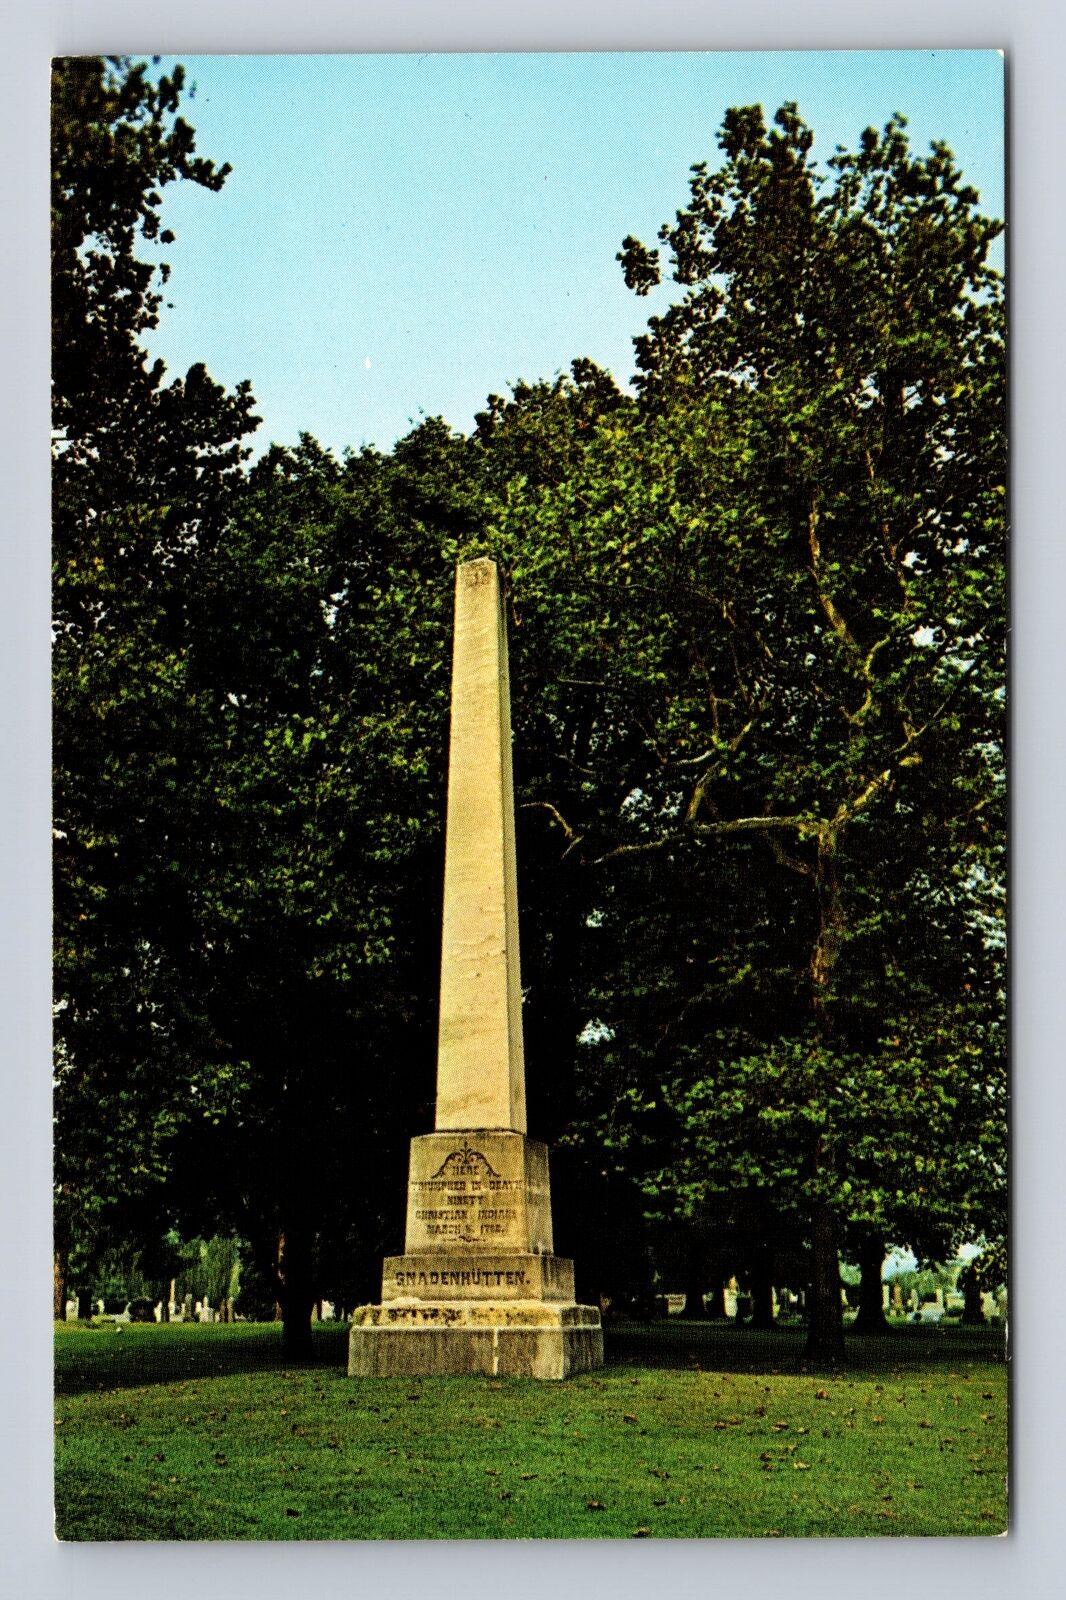 Gnadenhutten OH-Ohio, Monument Marking Massacre Christians, Vintage Postcard